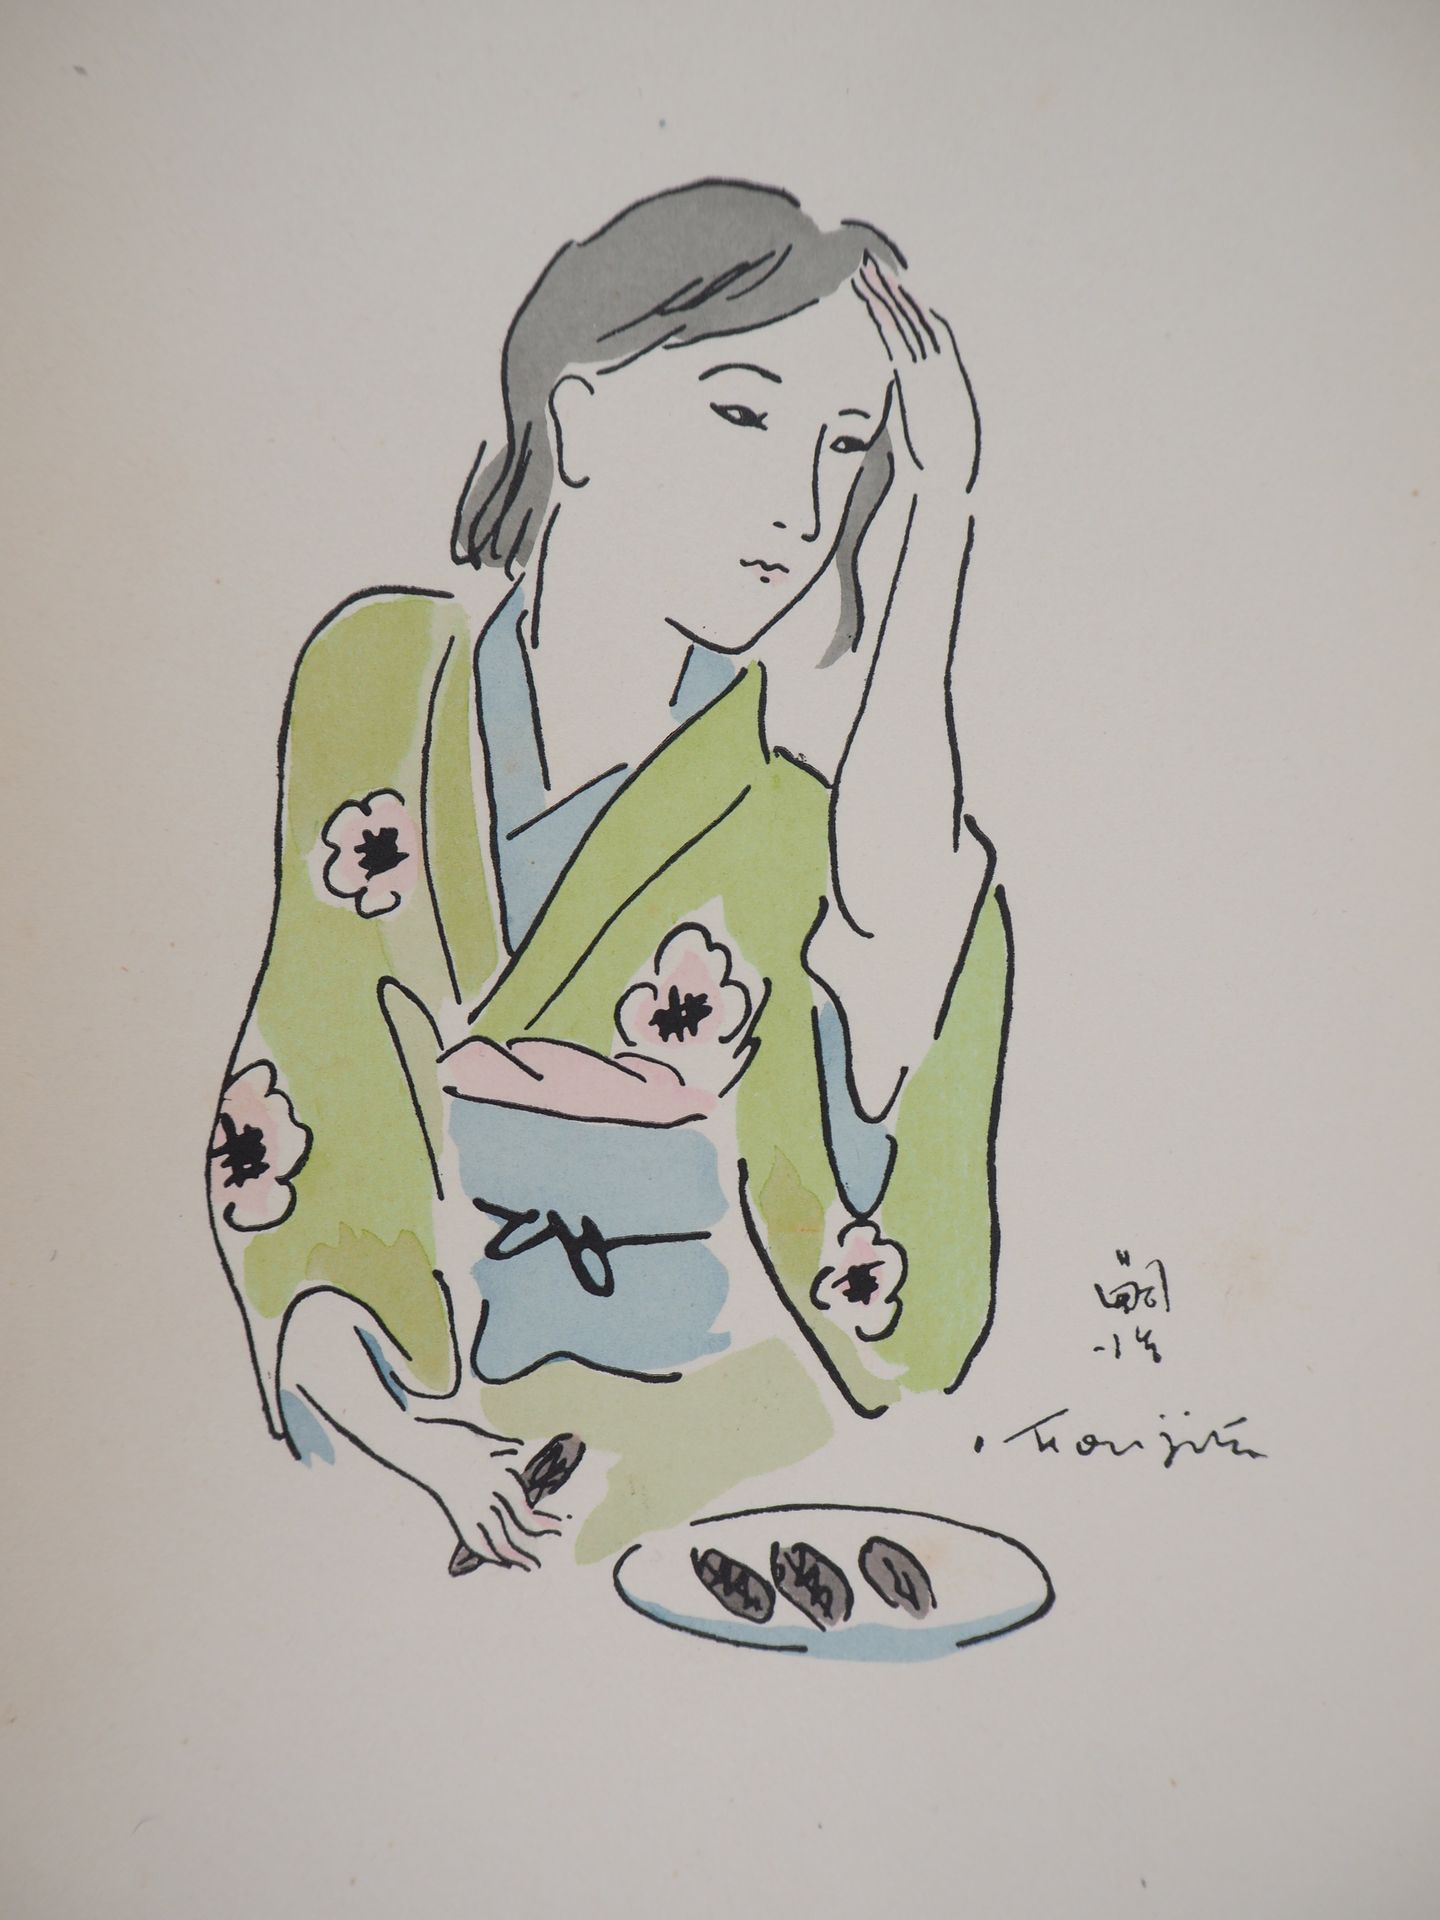 Tsuguharu FOUJITA Léonard Tsuguharu FOUJITA

Femme en kimono se coiffant, 1936

&hellip;